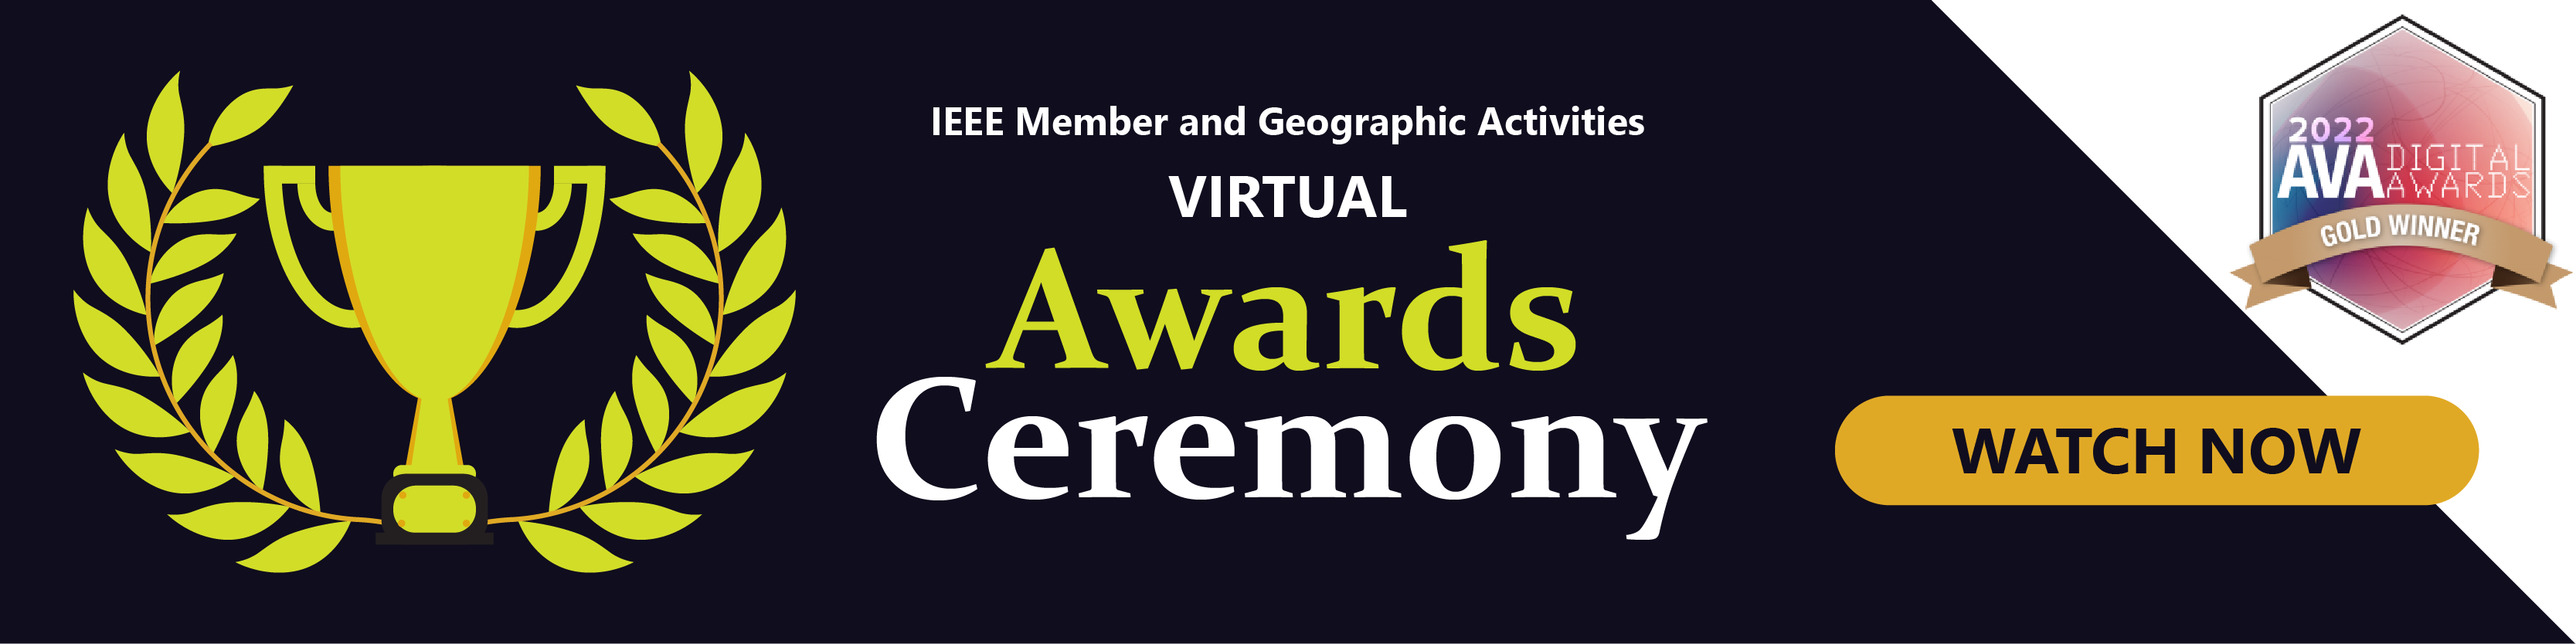 Click to watch the MGA Virtual Awards Ceremony